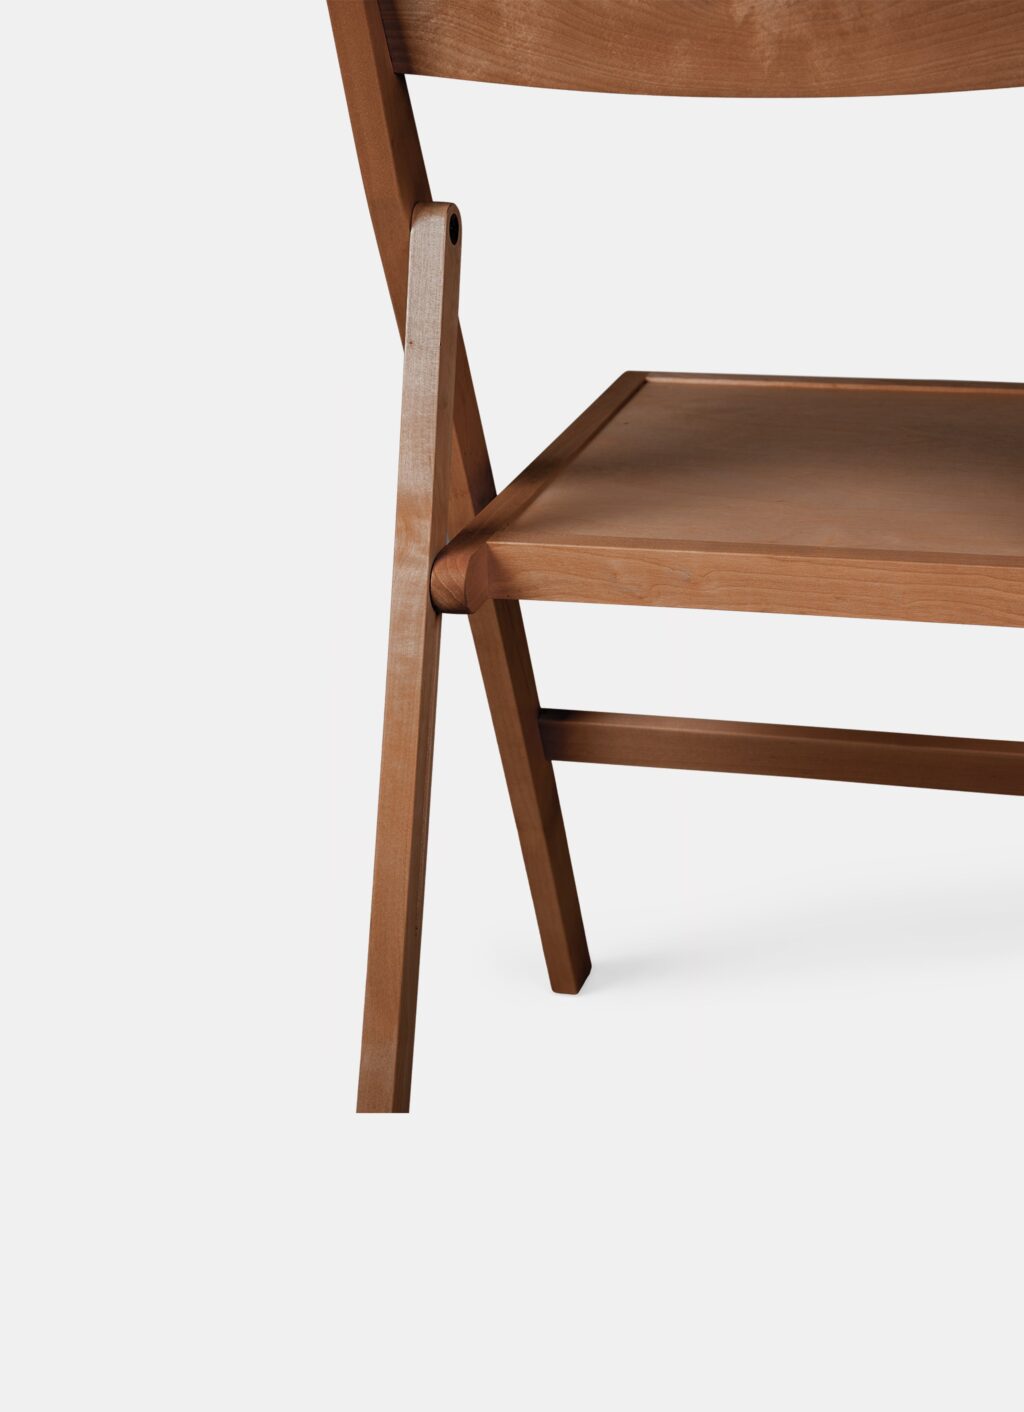 Frama - Flat Folding Chair - Warm Brown Birch